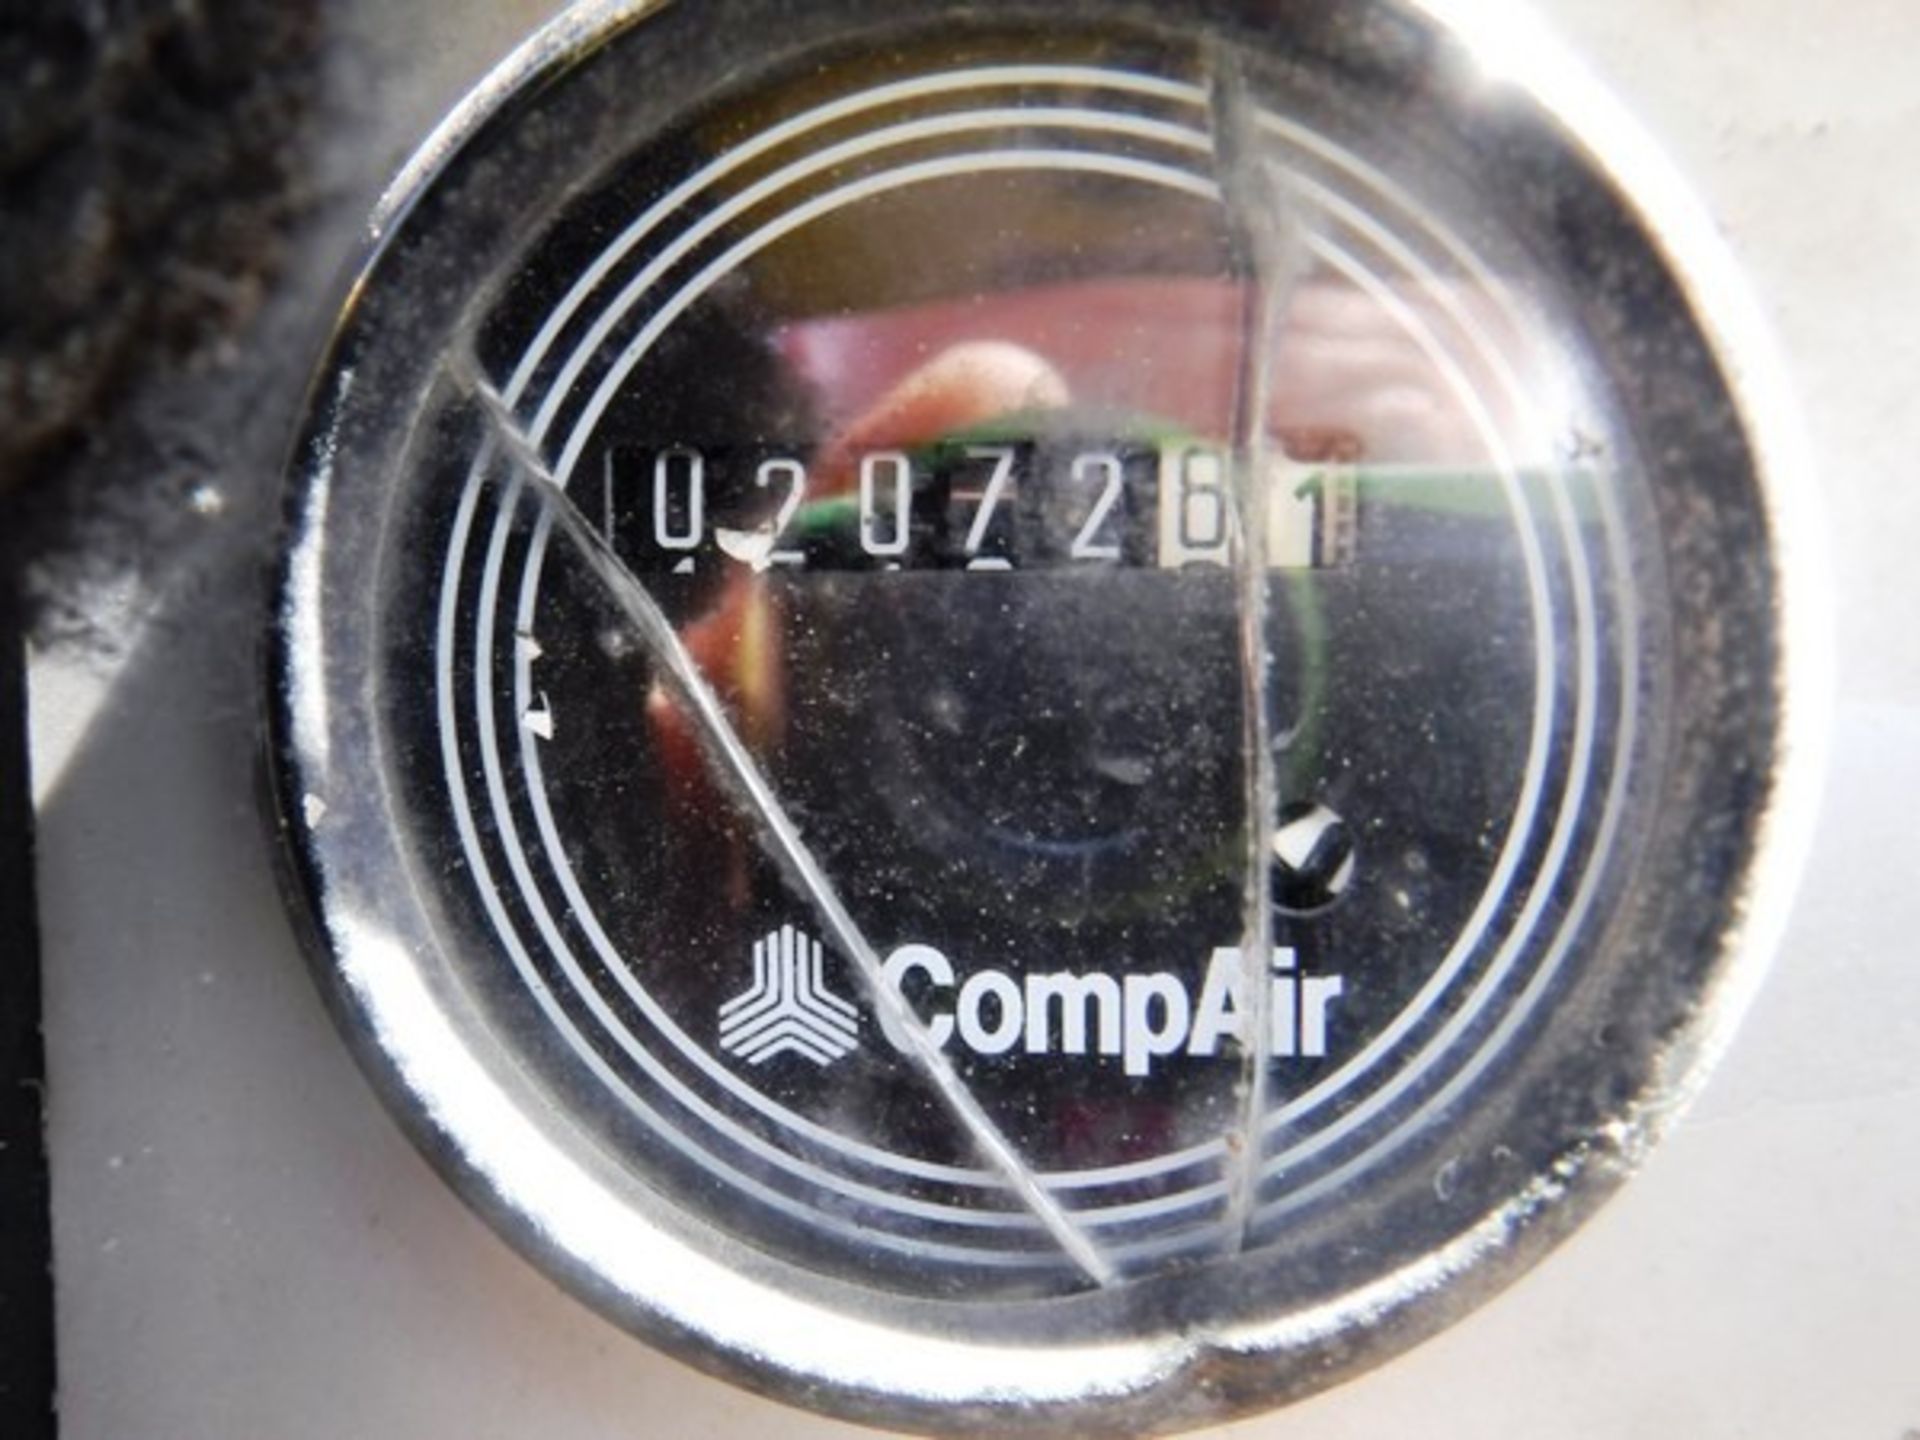 2004 COMPAIR C42 2T00Z DLT0404 compressor 2072hrs (not verified), - Image 5 of 6